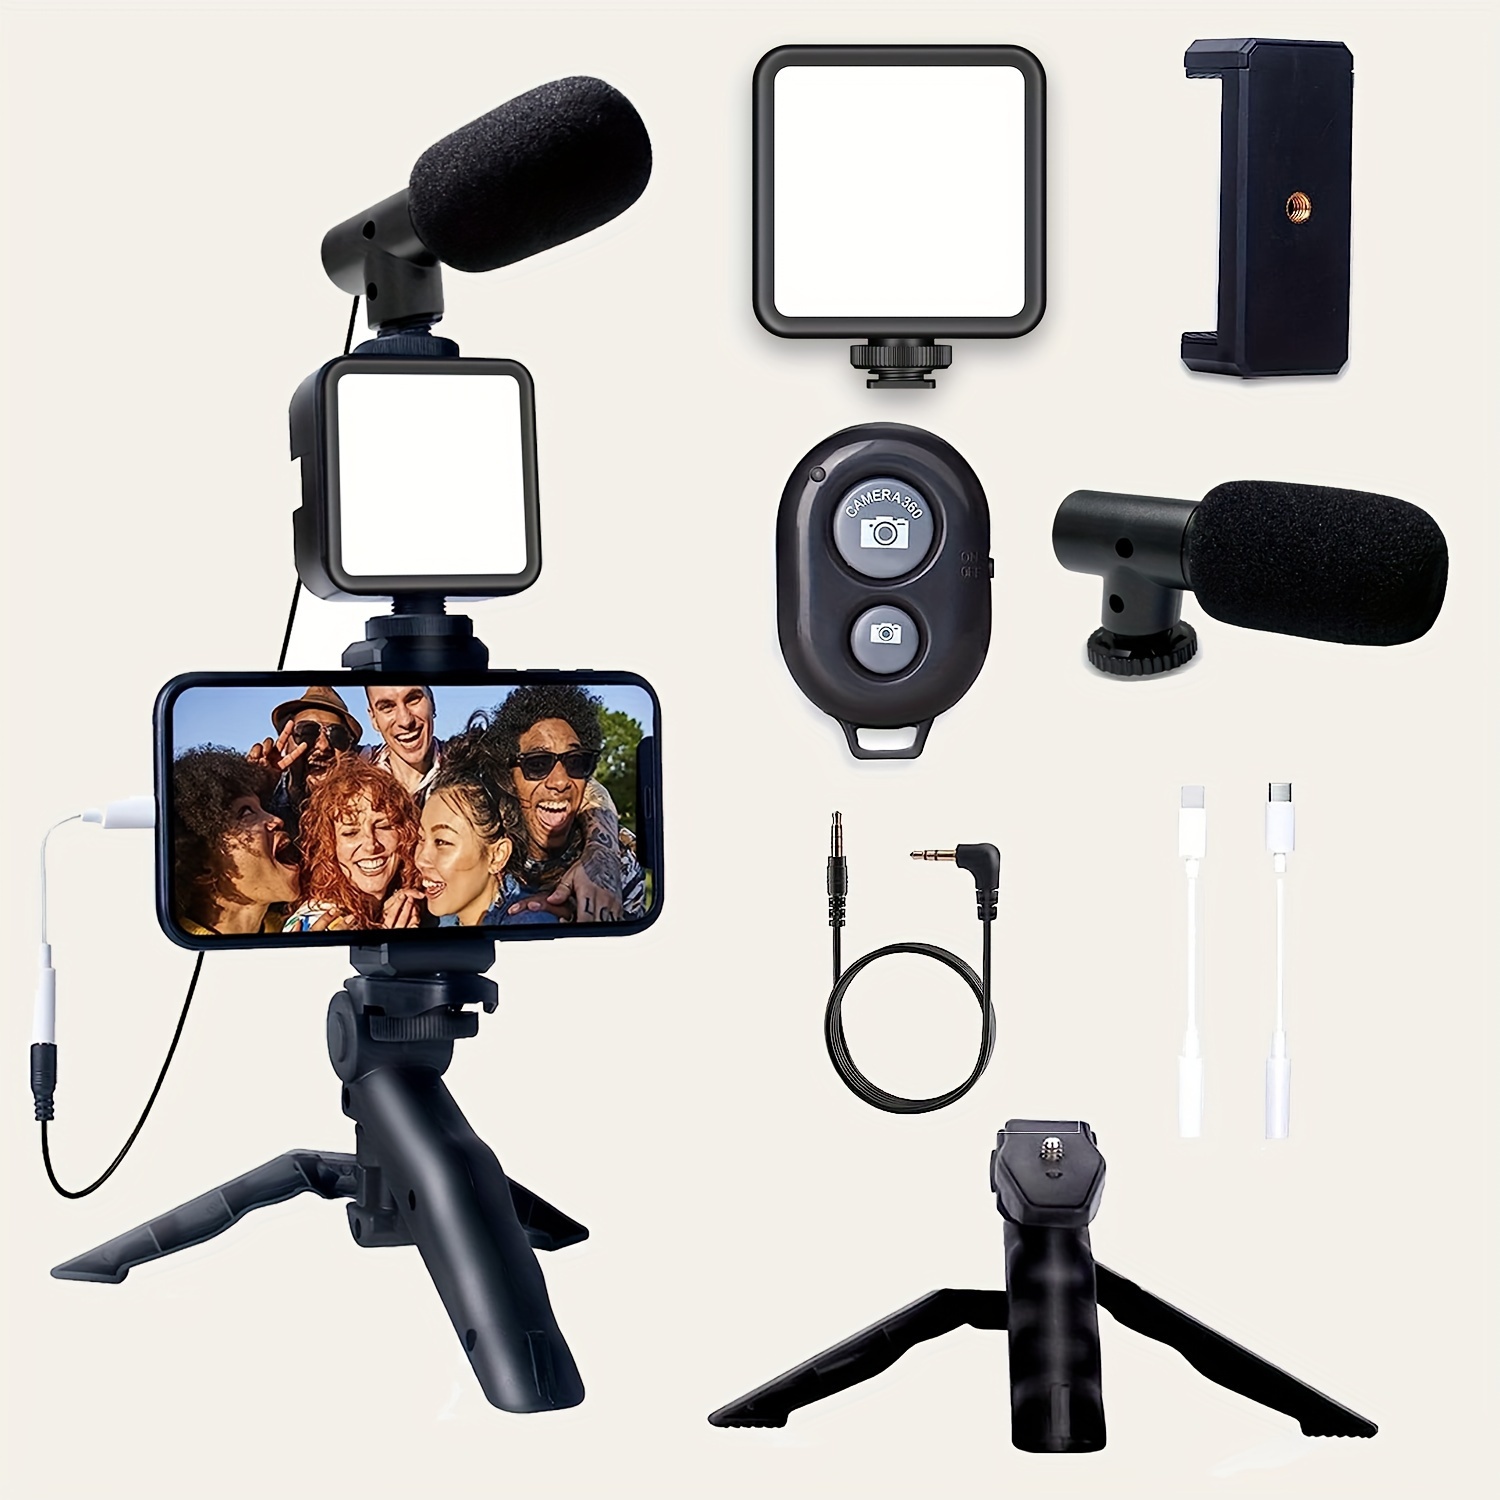 btfoor vlogging kit for iphone android with tripod 36 led light youtube starter kit with mini microphone for live stream video calls vlogging youtube instagram tiktok details 0